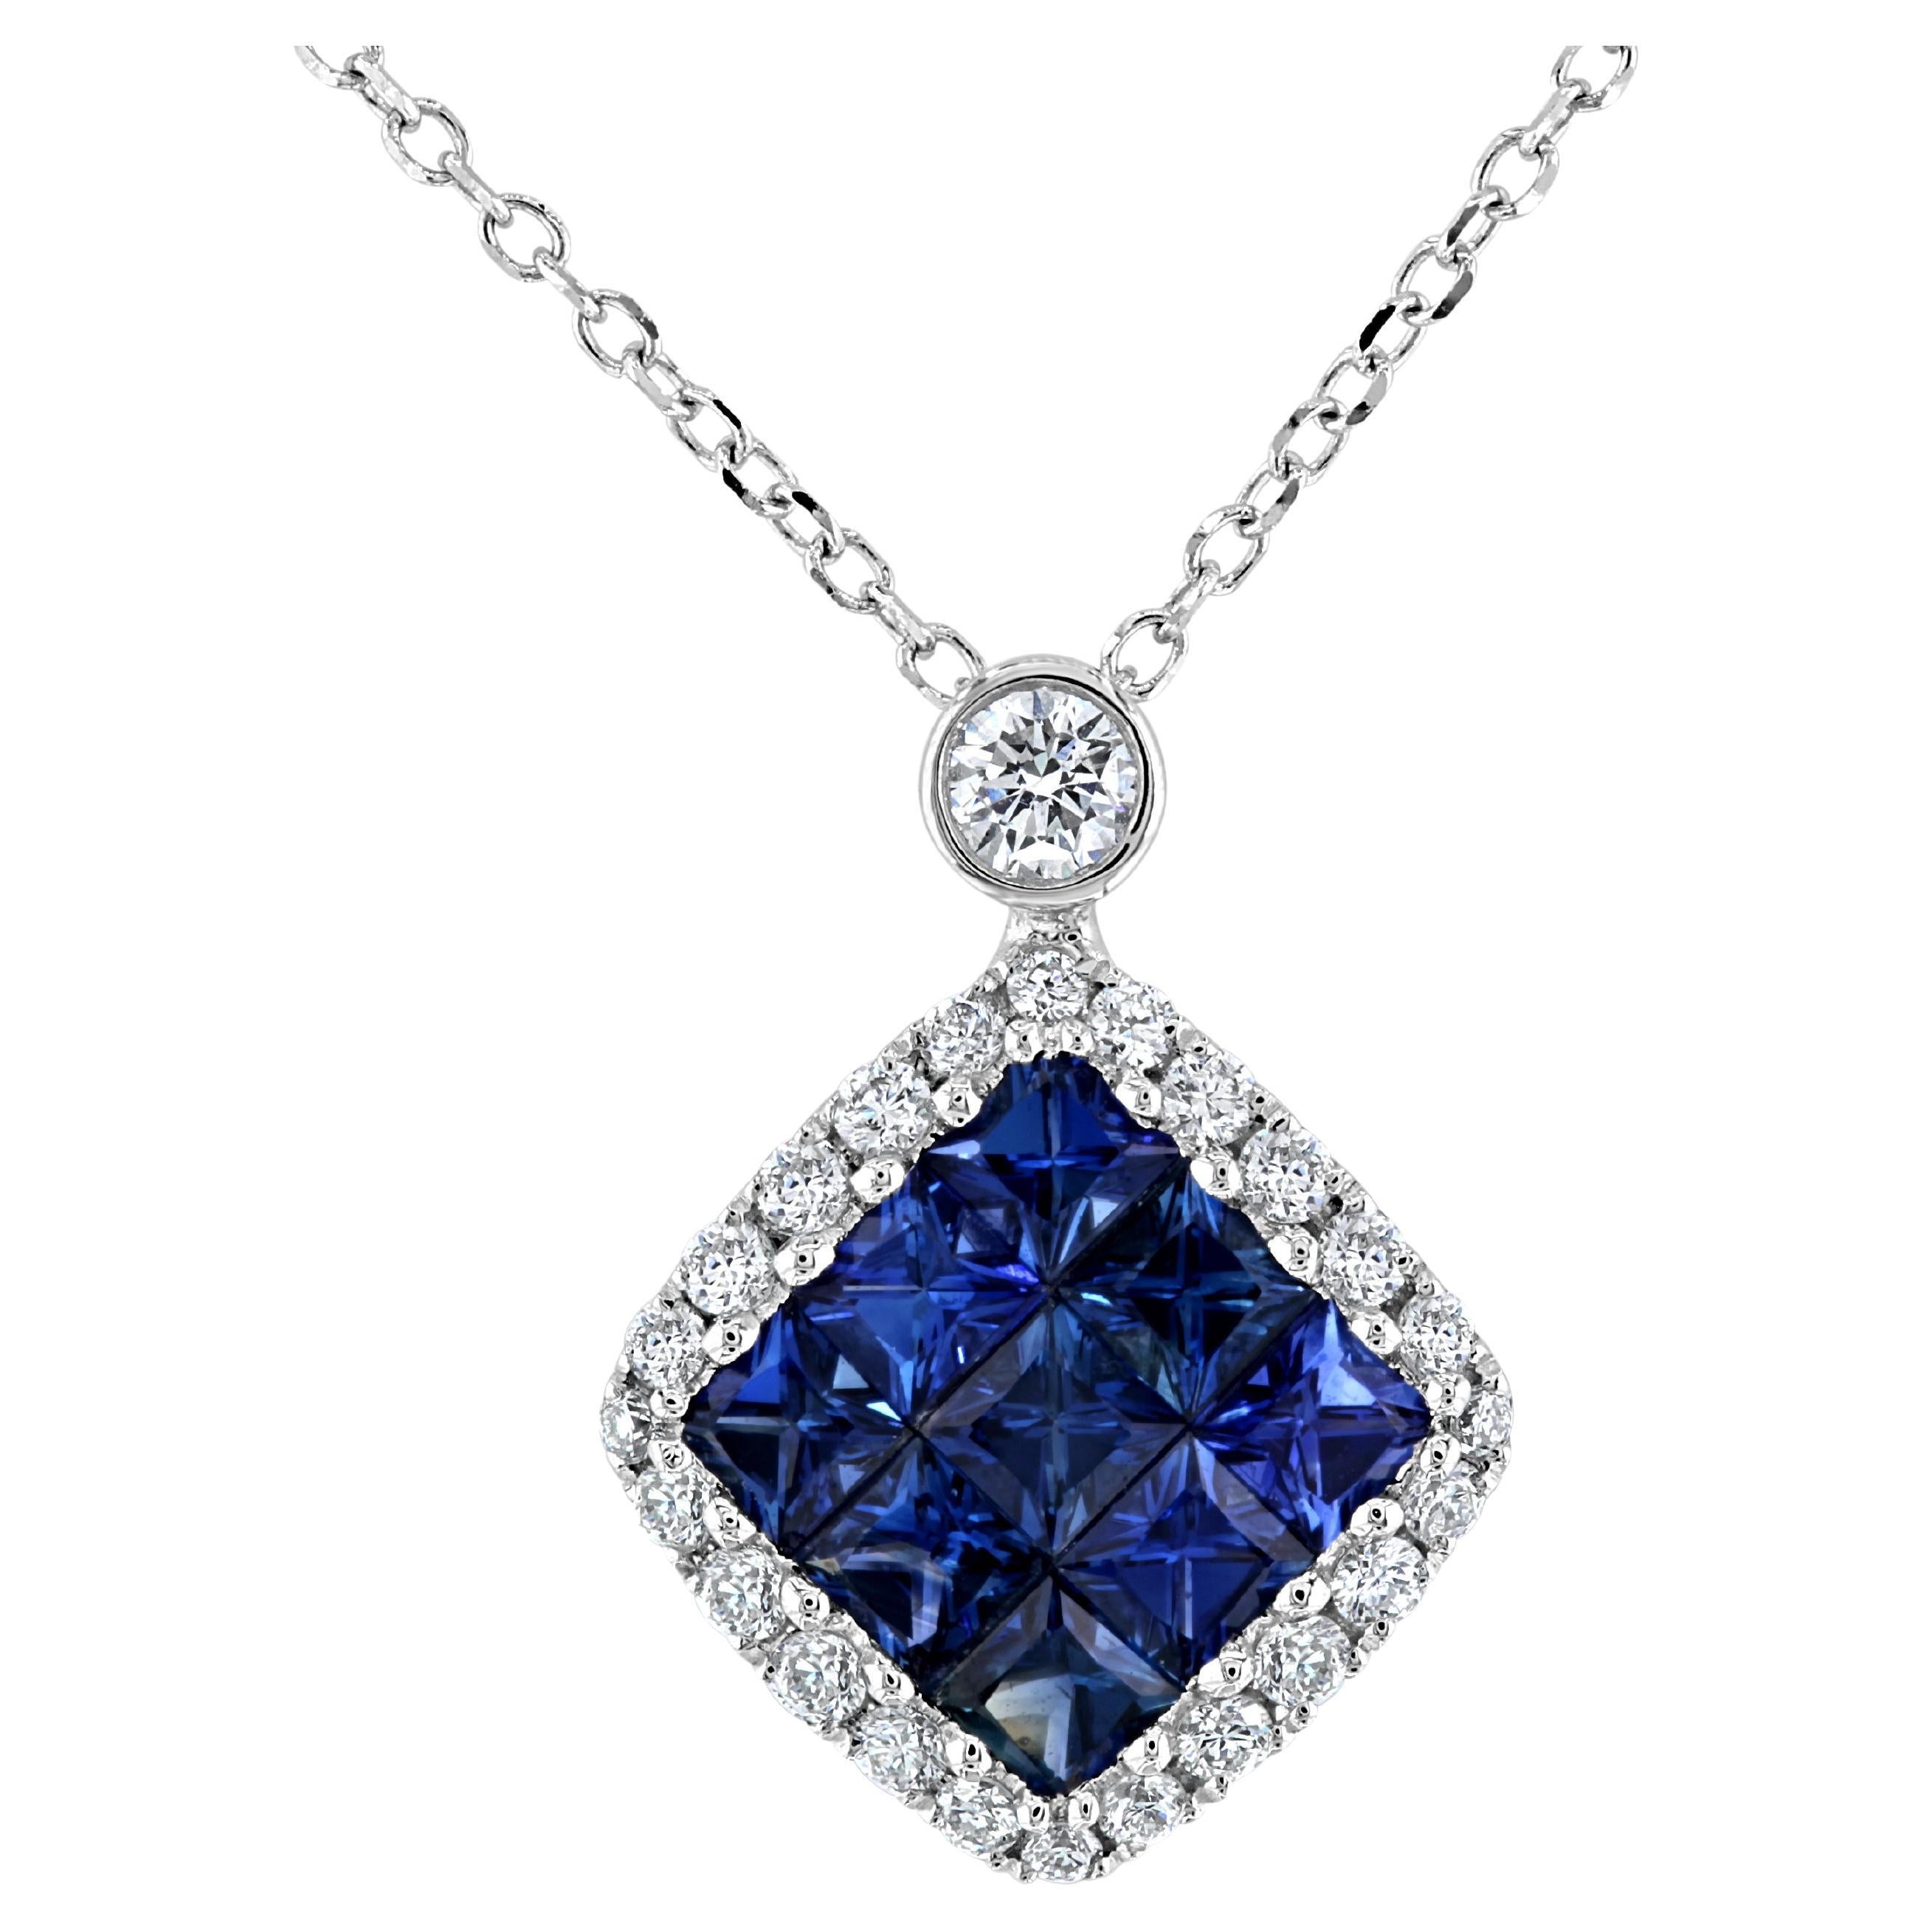 0.74 Carat Blue Sapphire and 0.21 Carat Diamond Pendant in 18k White ref1461 For Sale